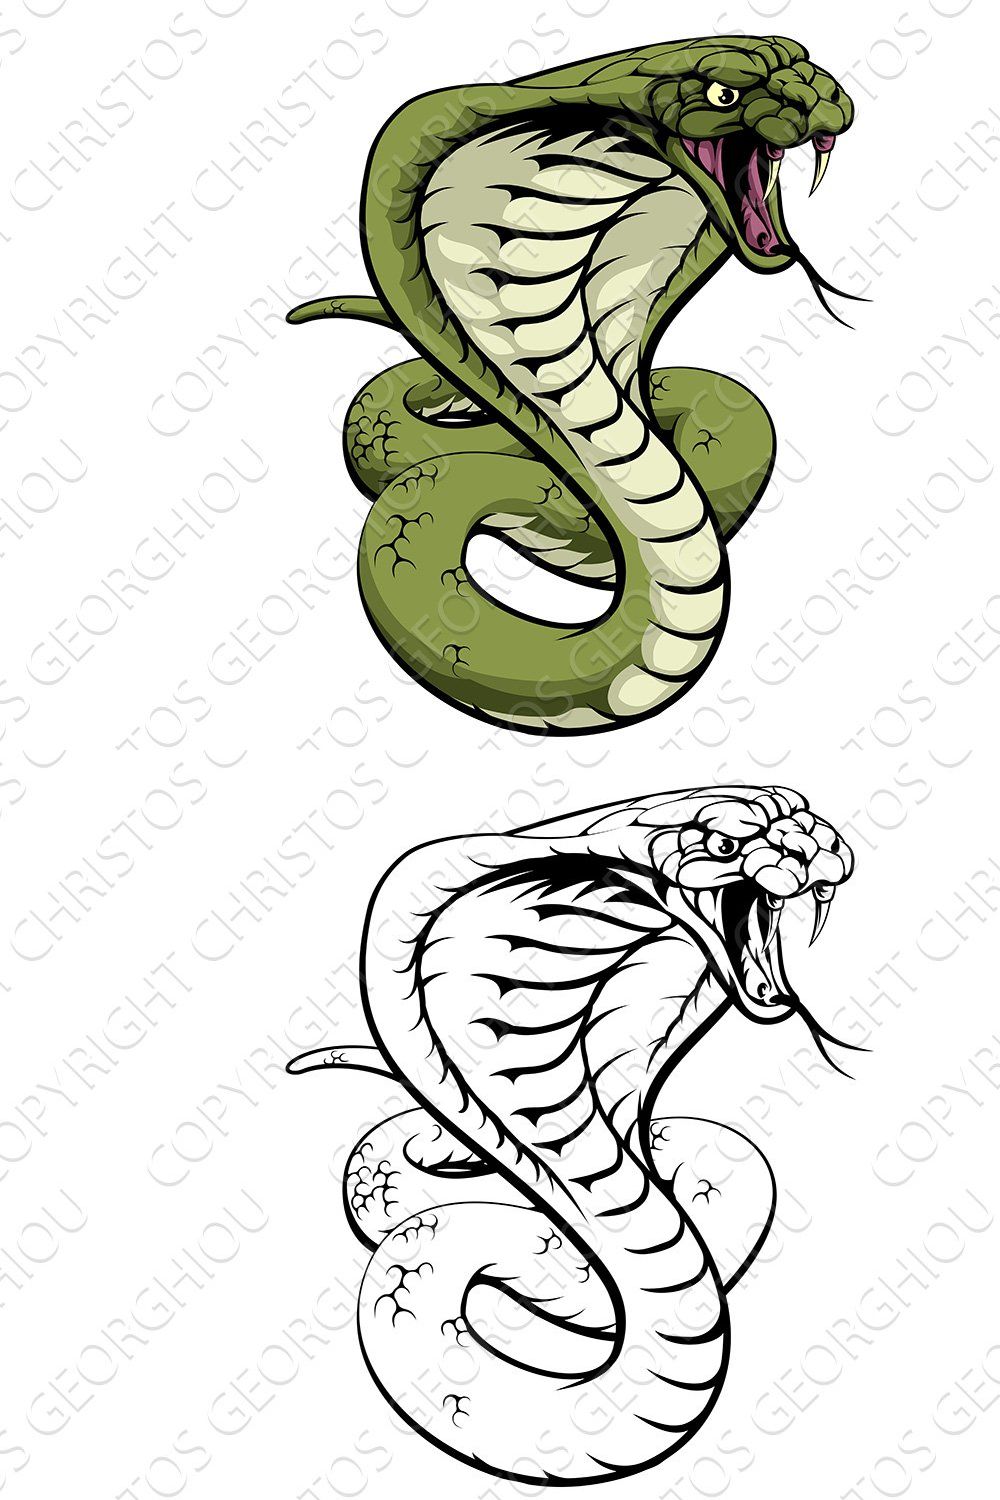 How to draw a Cobra snake - Spoken Tutorial - YouTube